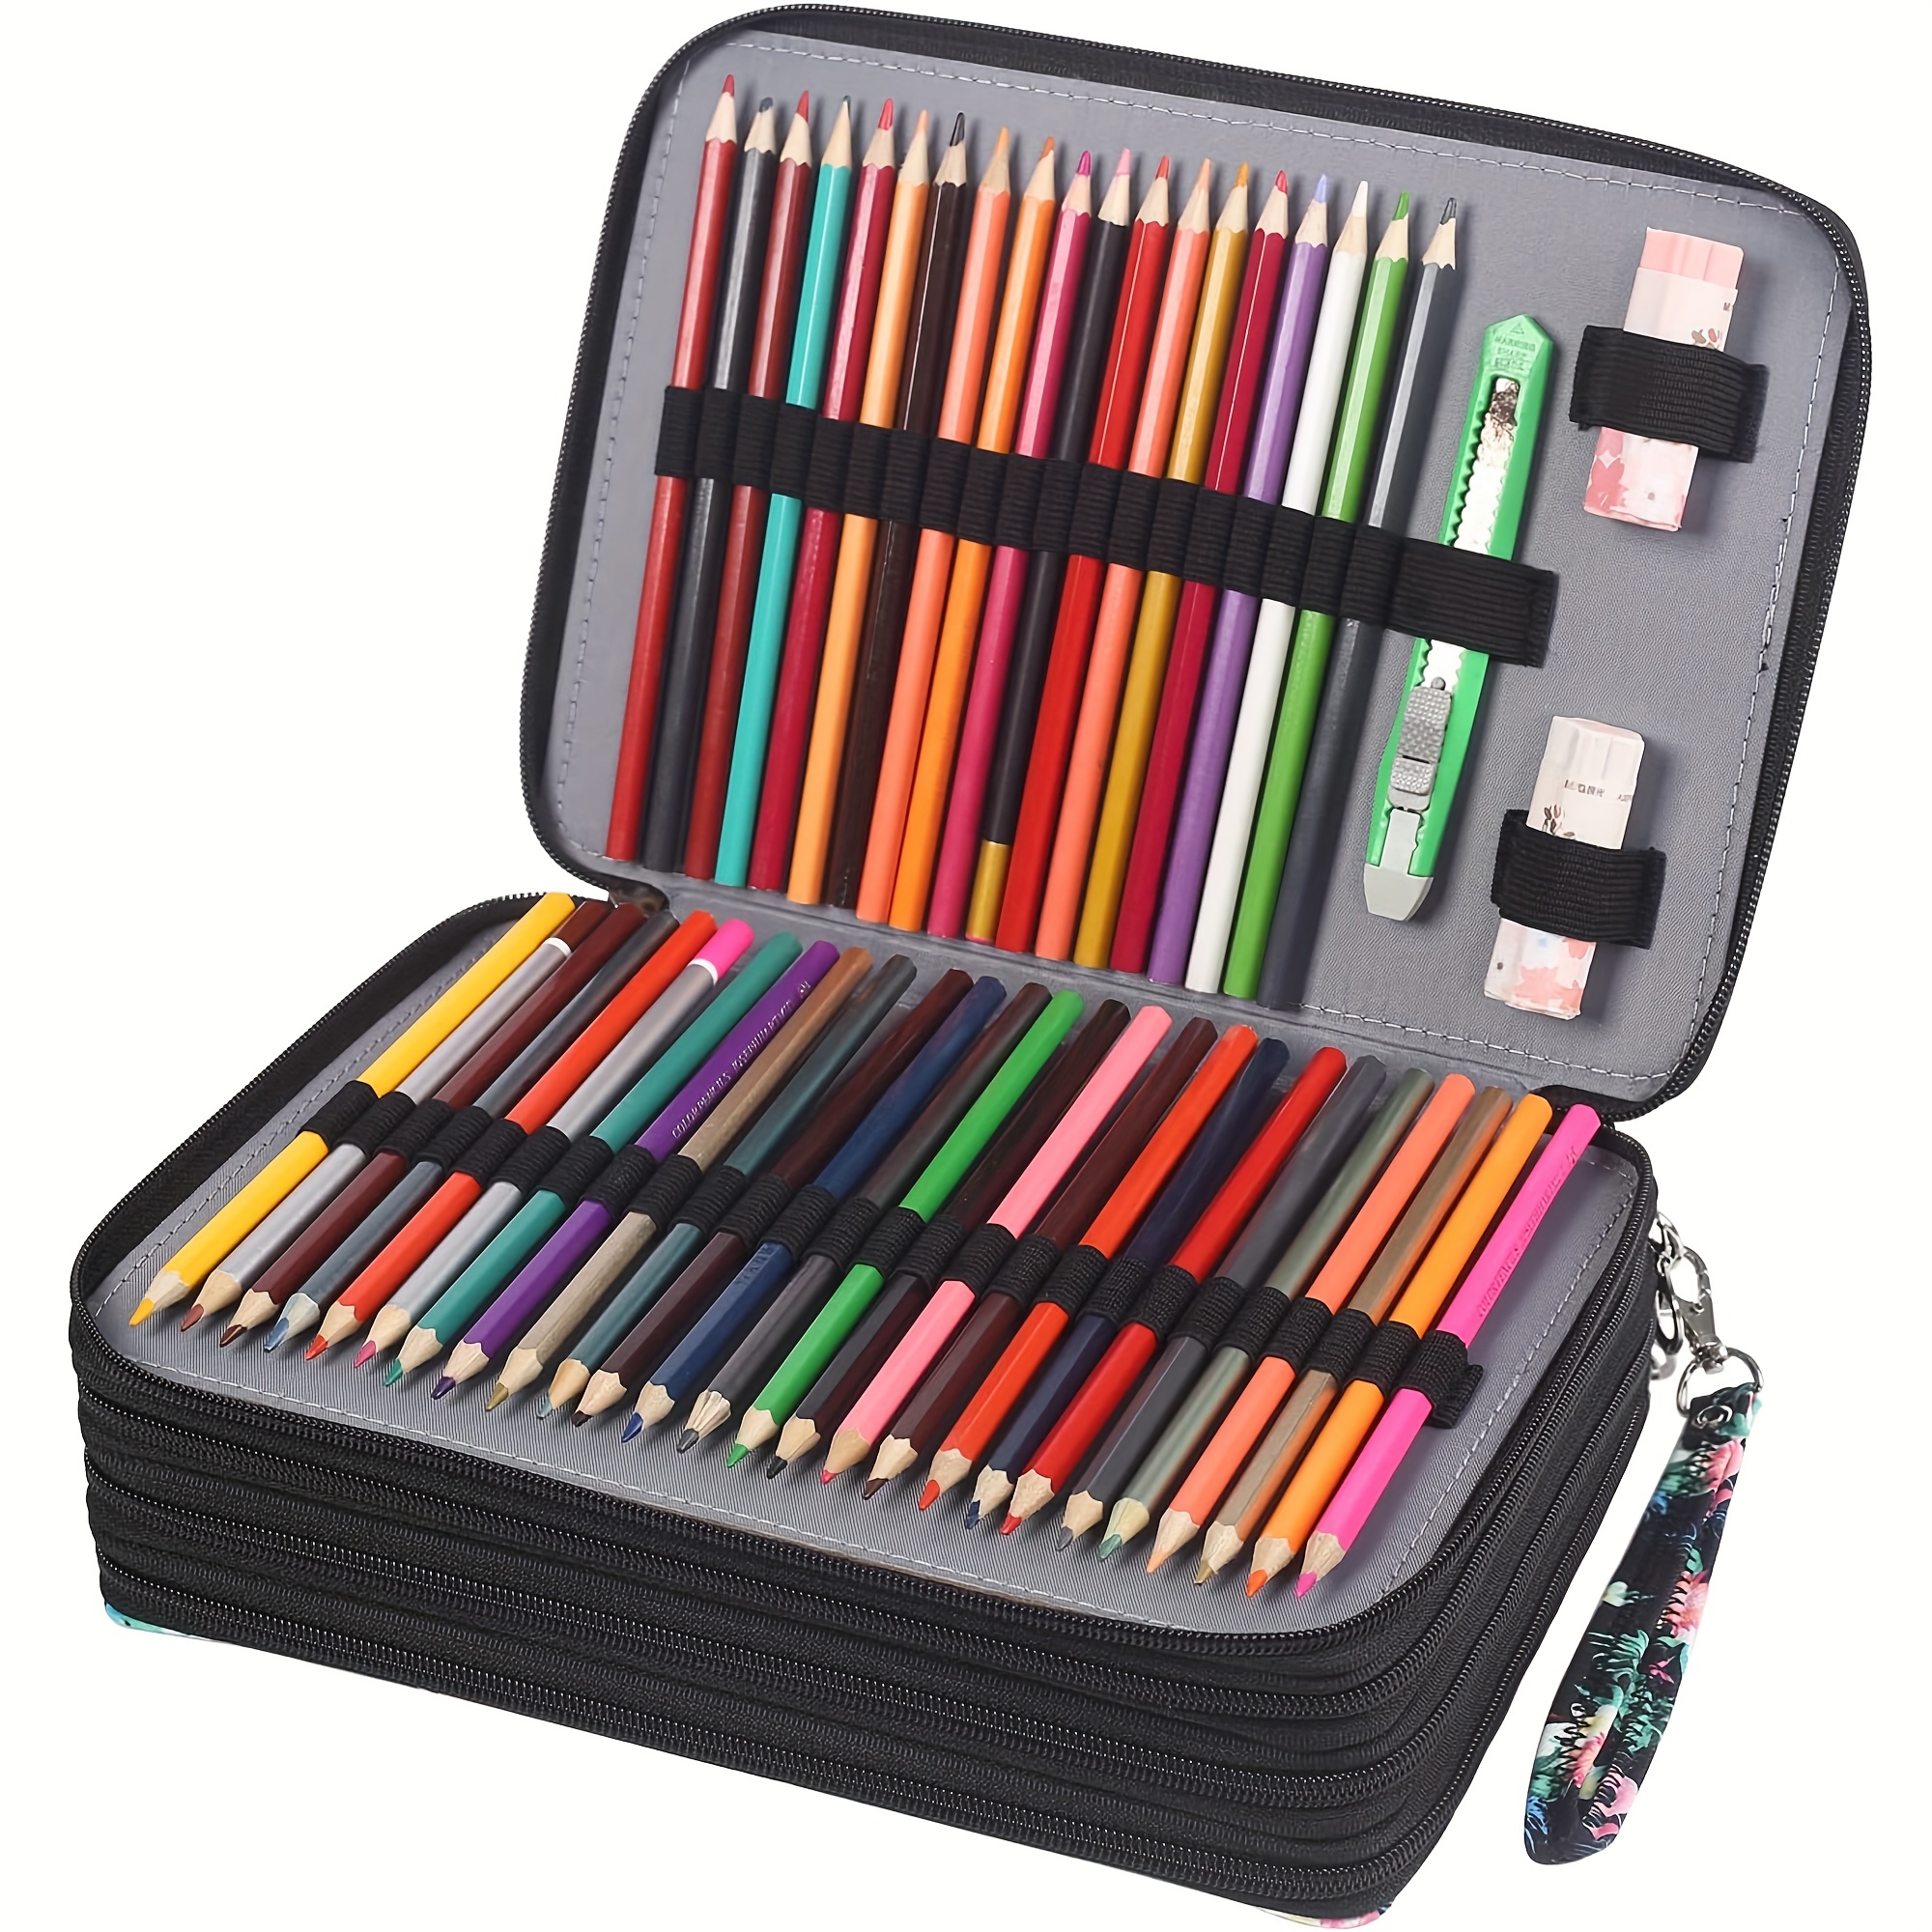 Colored Pencil Case - 200 Slots Pencil Holder With Zipper Closure